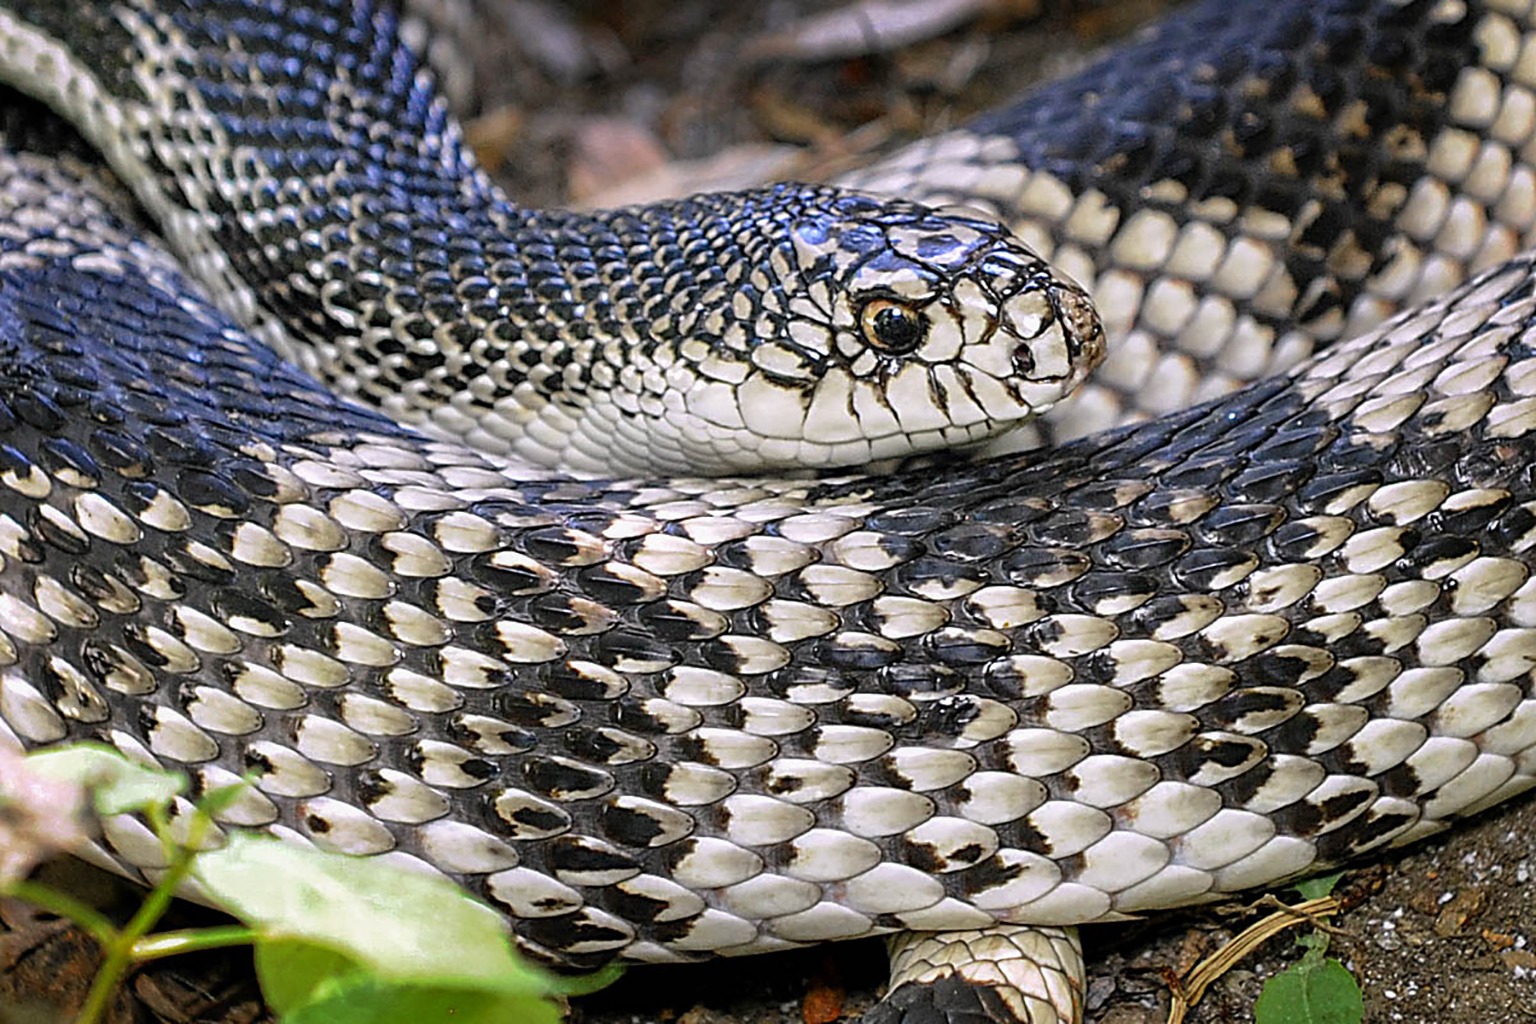 Northern Pine Snake | The Maryland Zoo